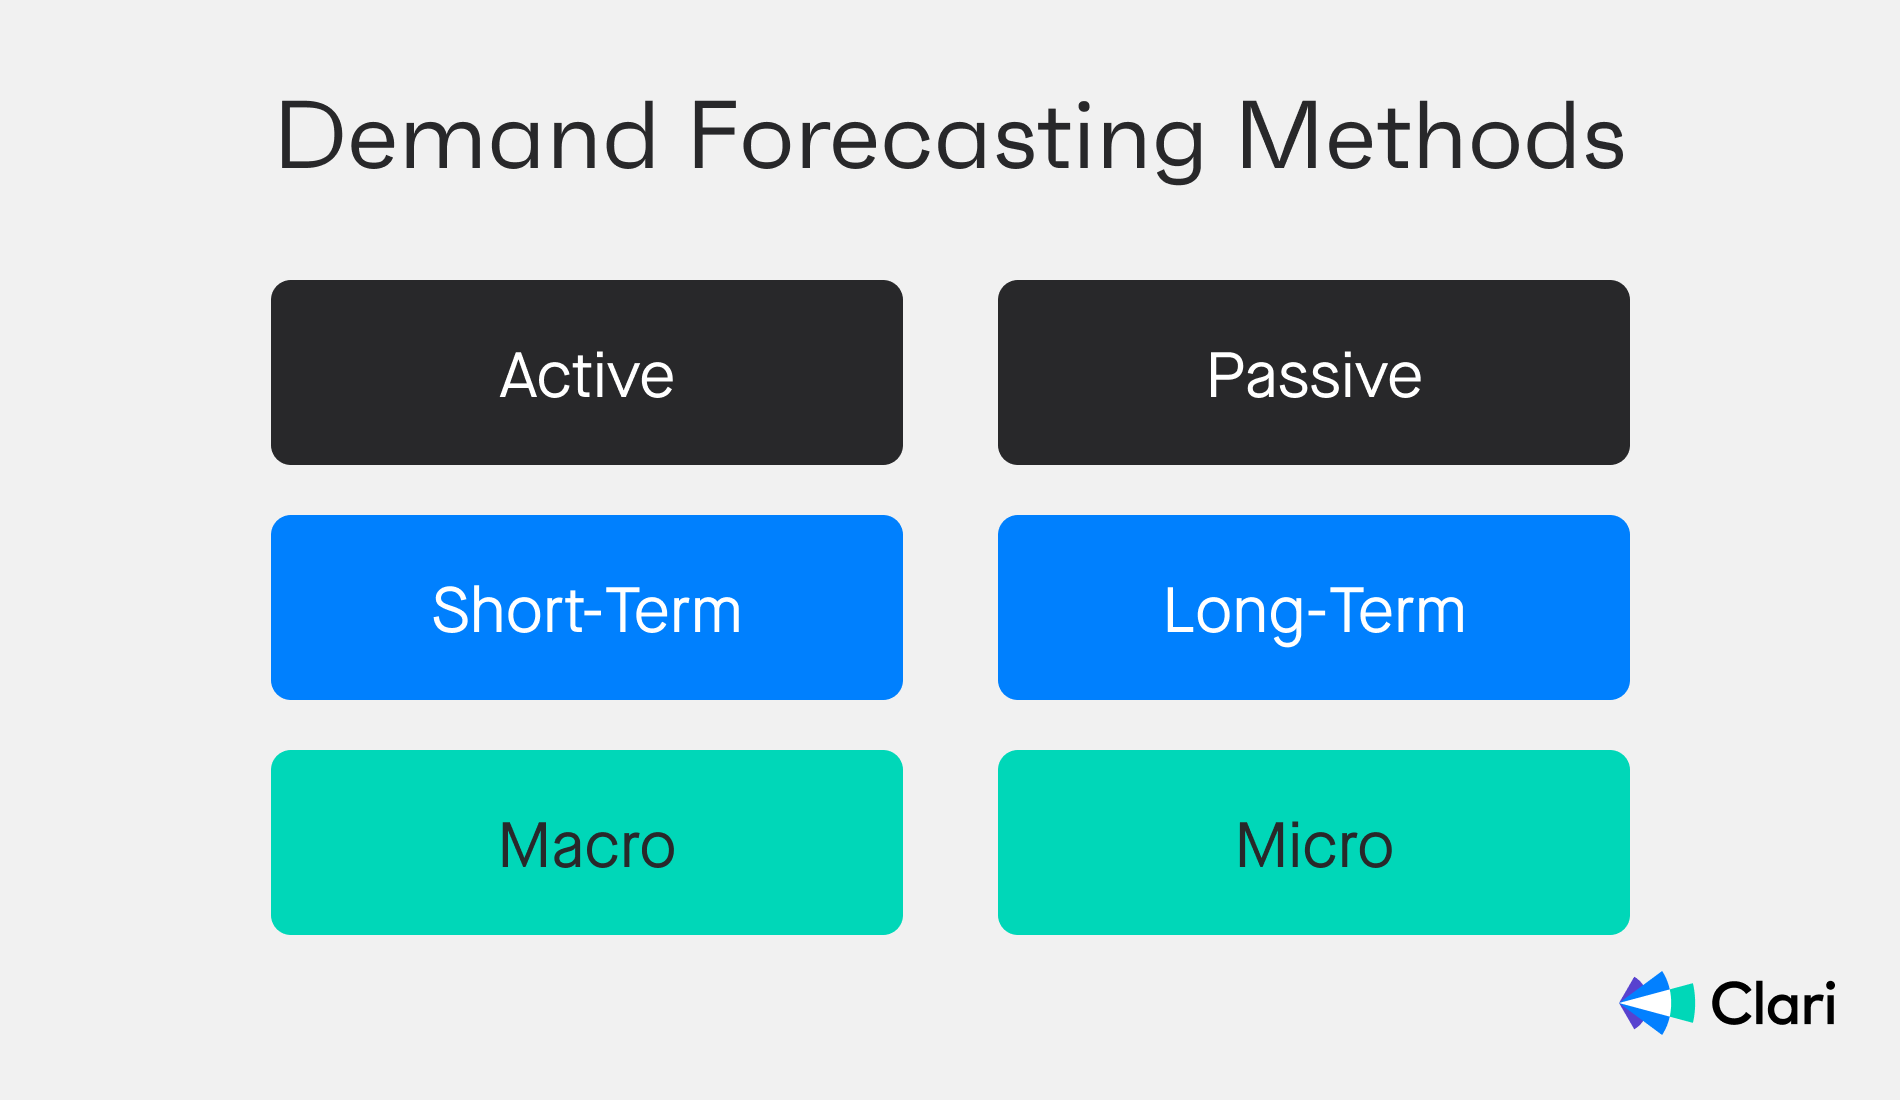 Six demand forecasting methods